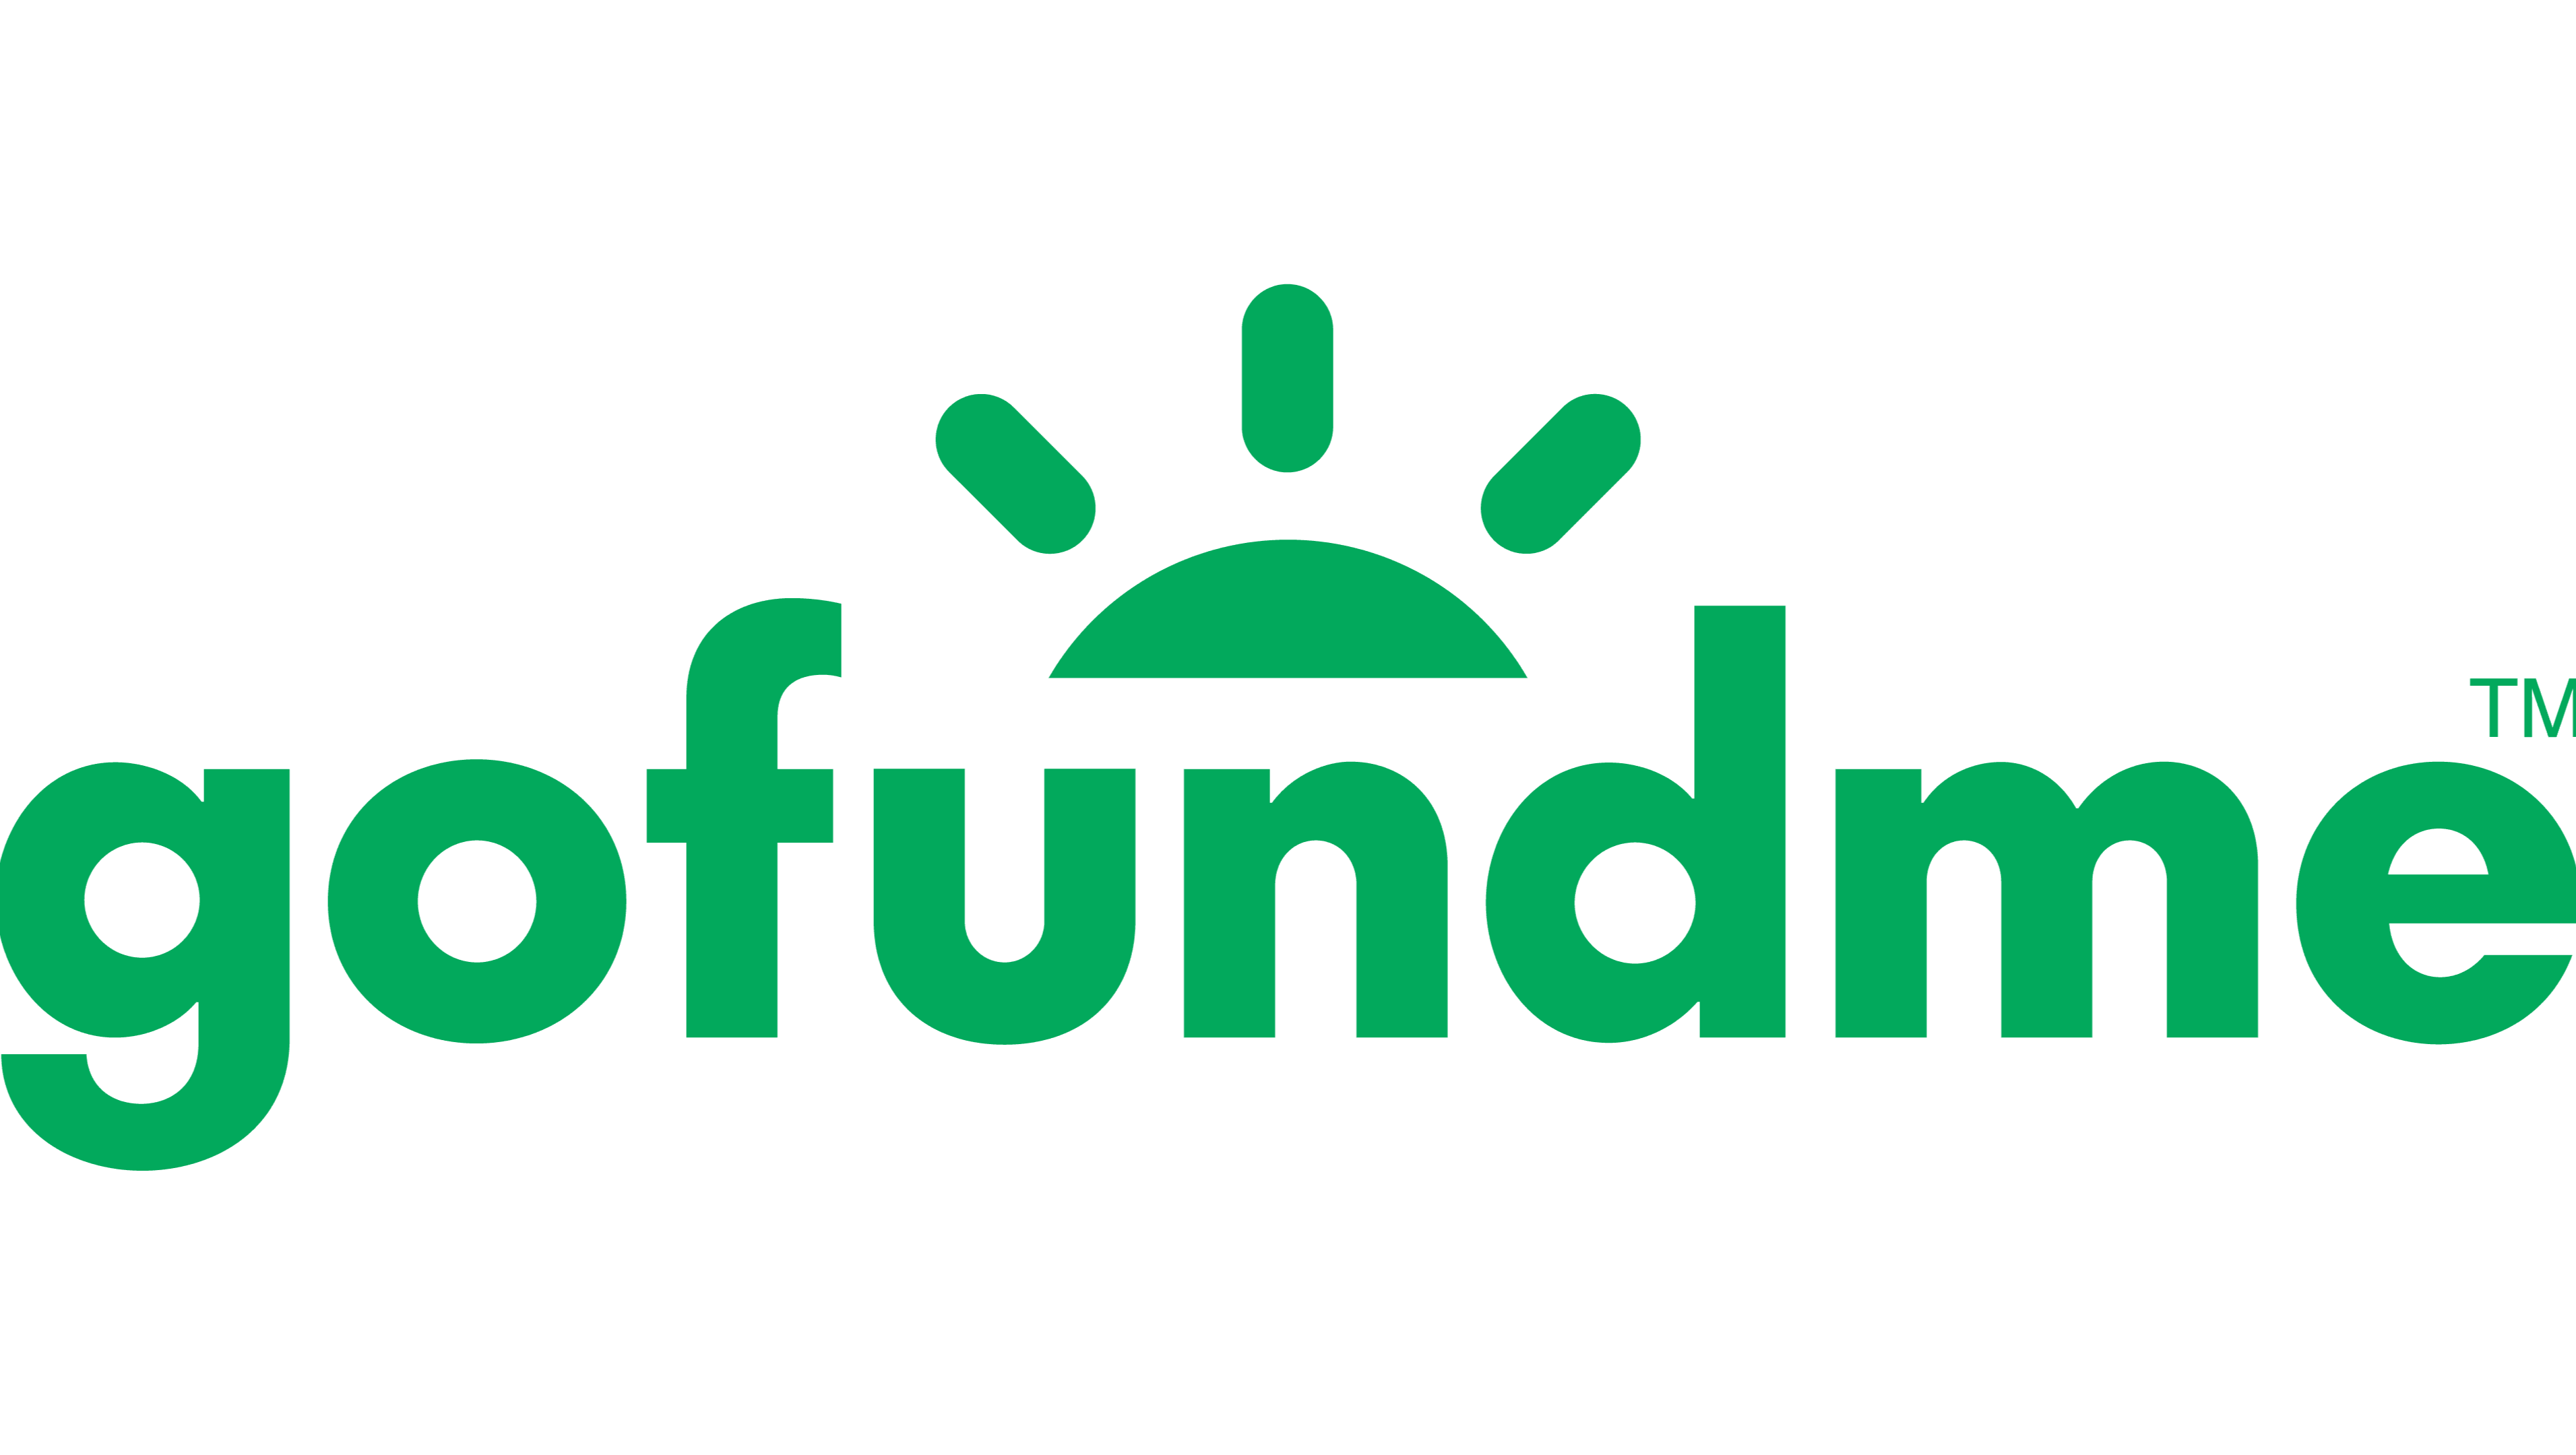 Logotipo do gofundme